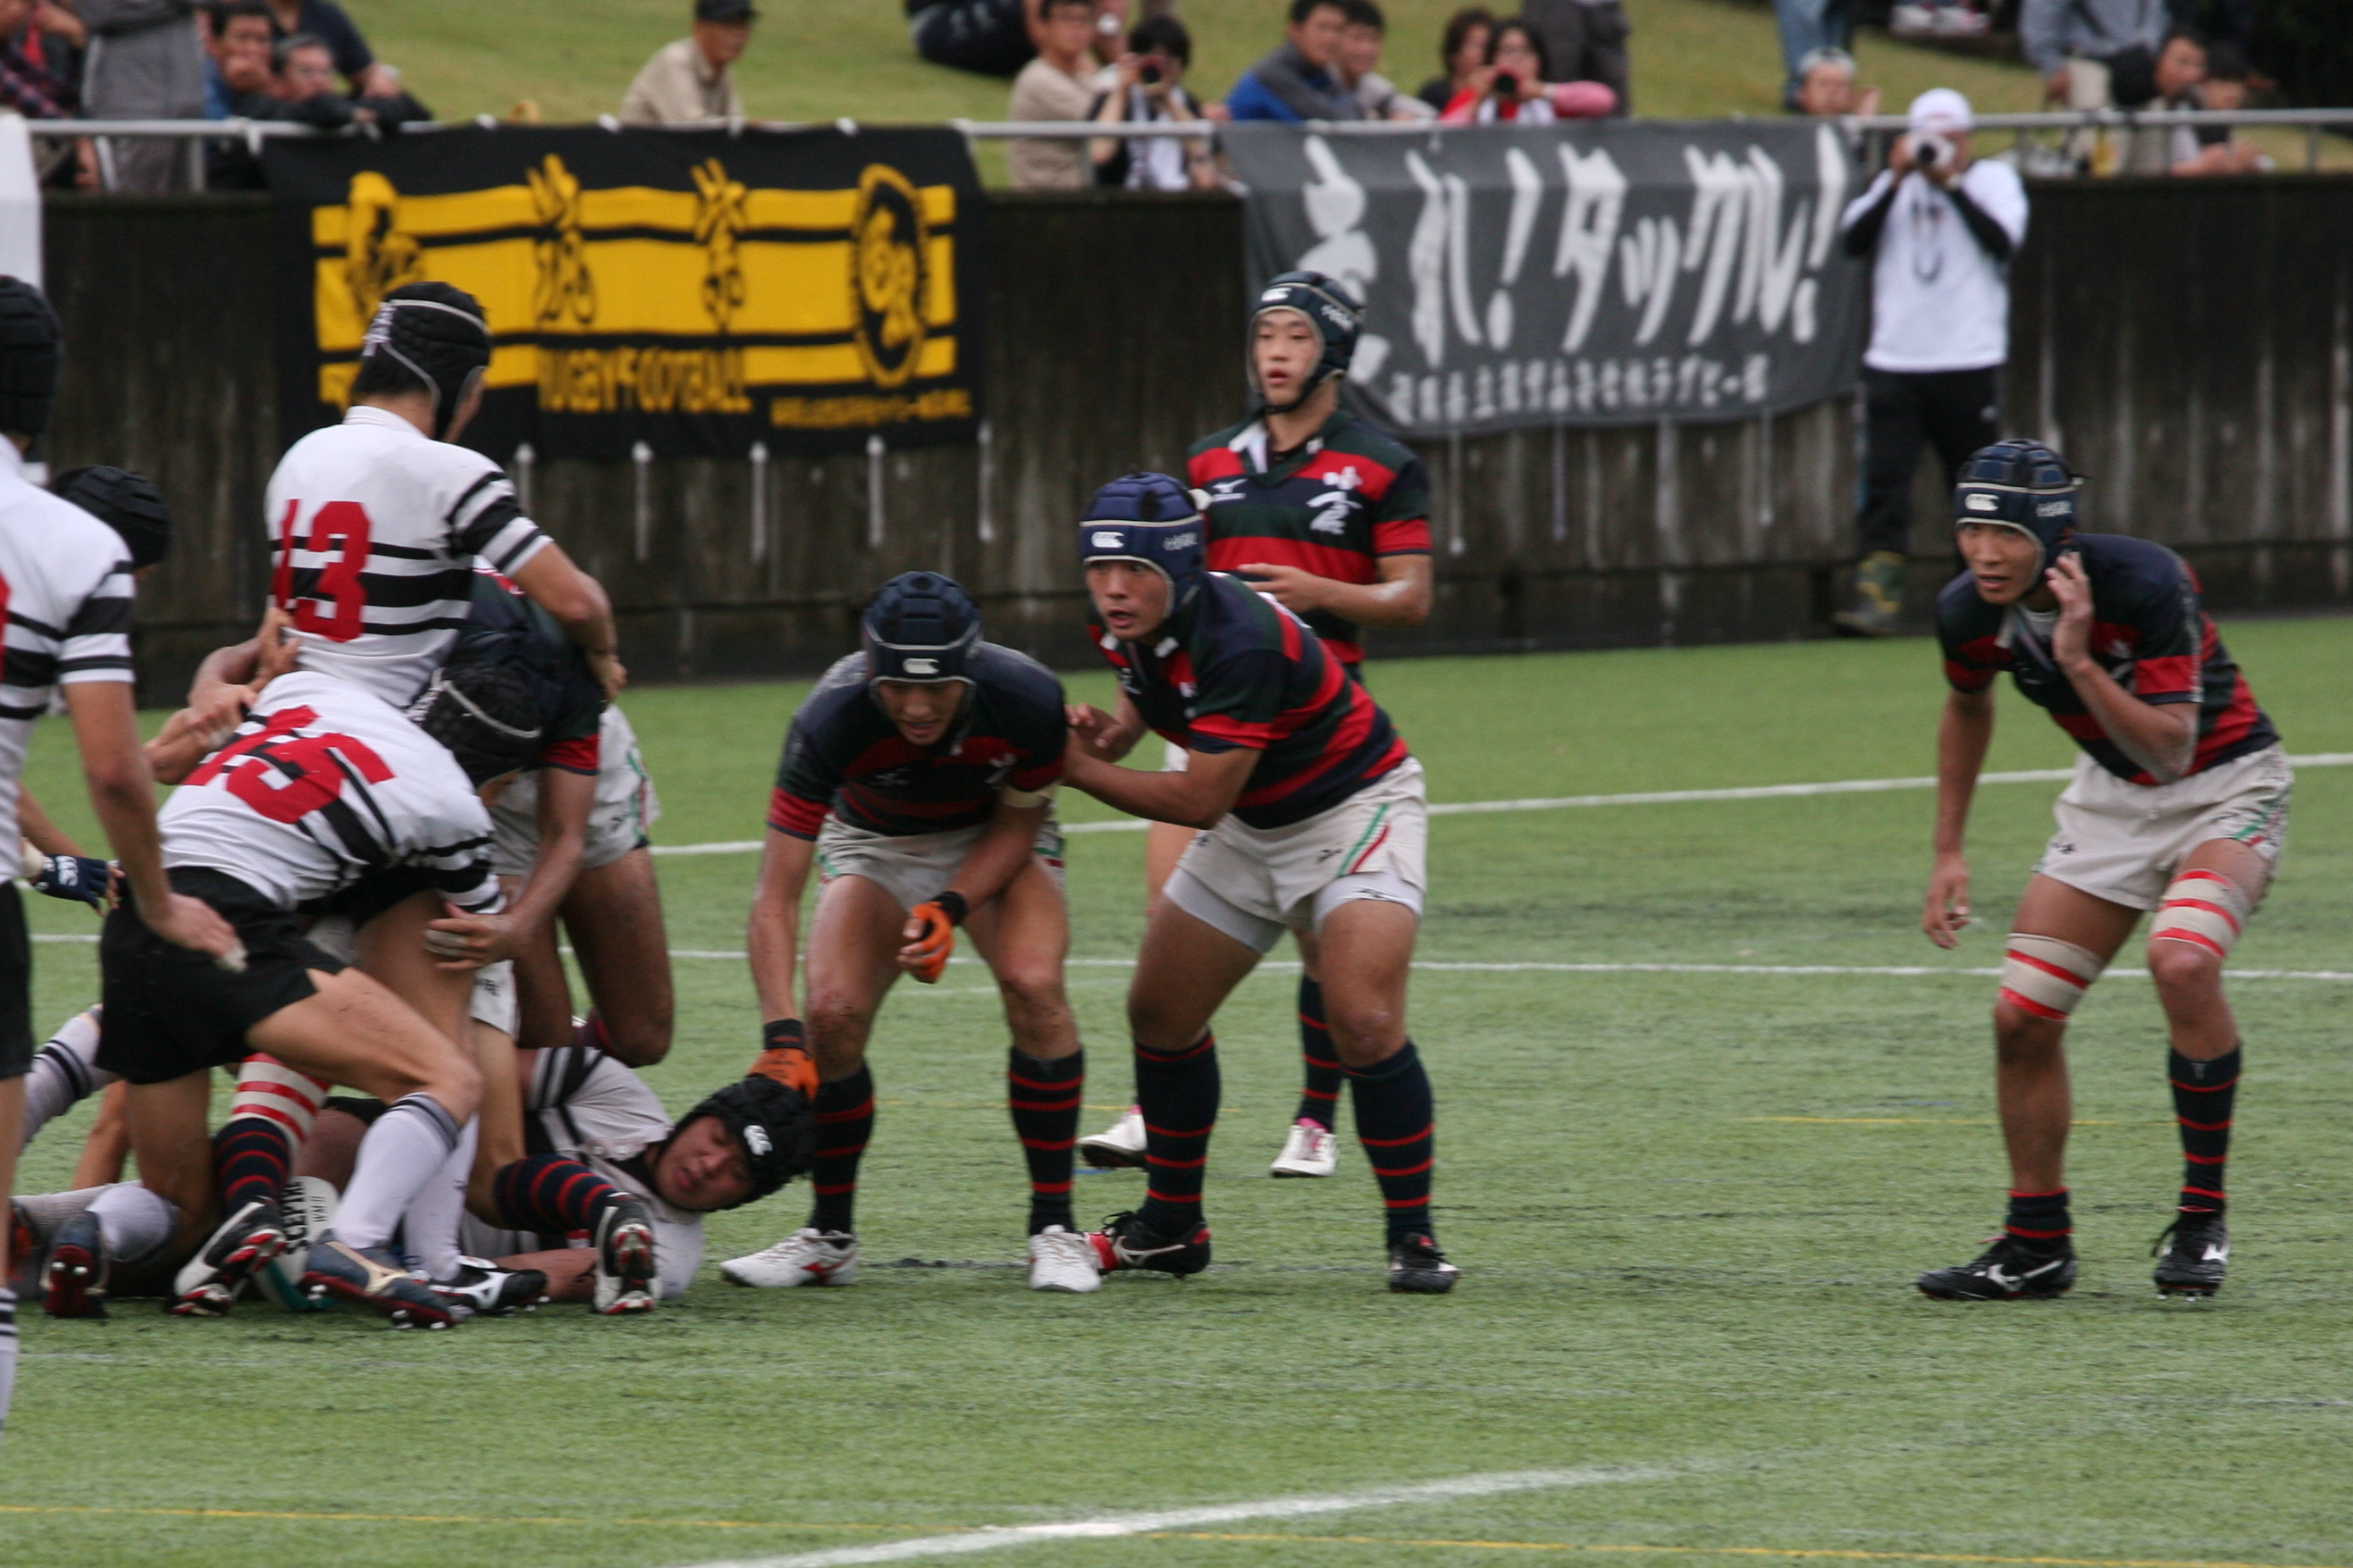 http://kokura-rugby.sakura.ne.jp/2011.11.6-3-26.JPG